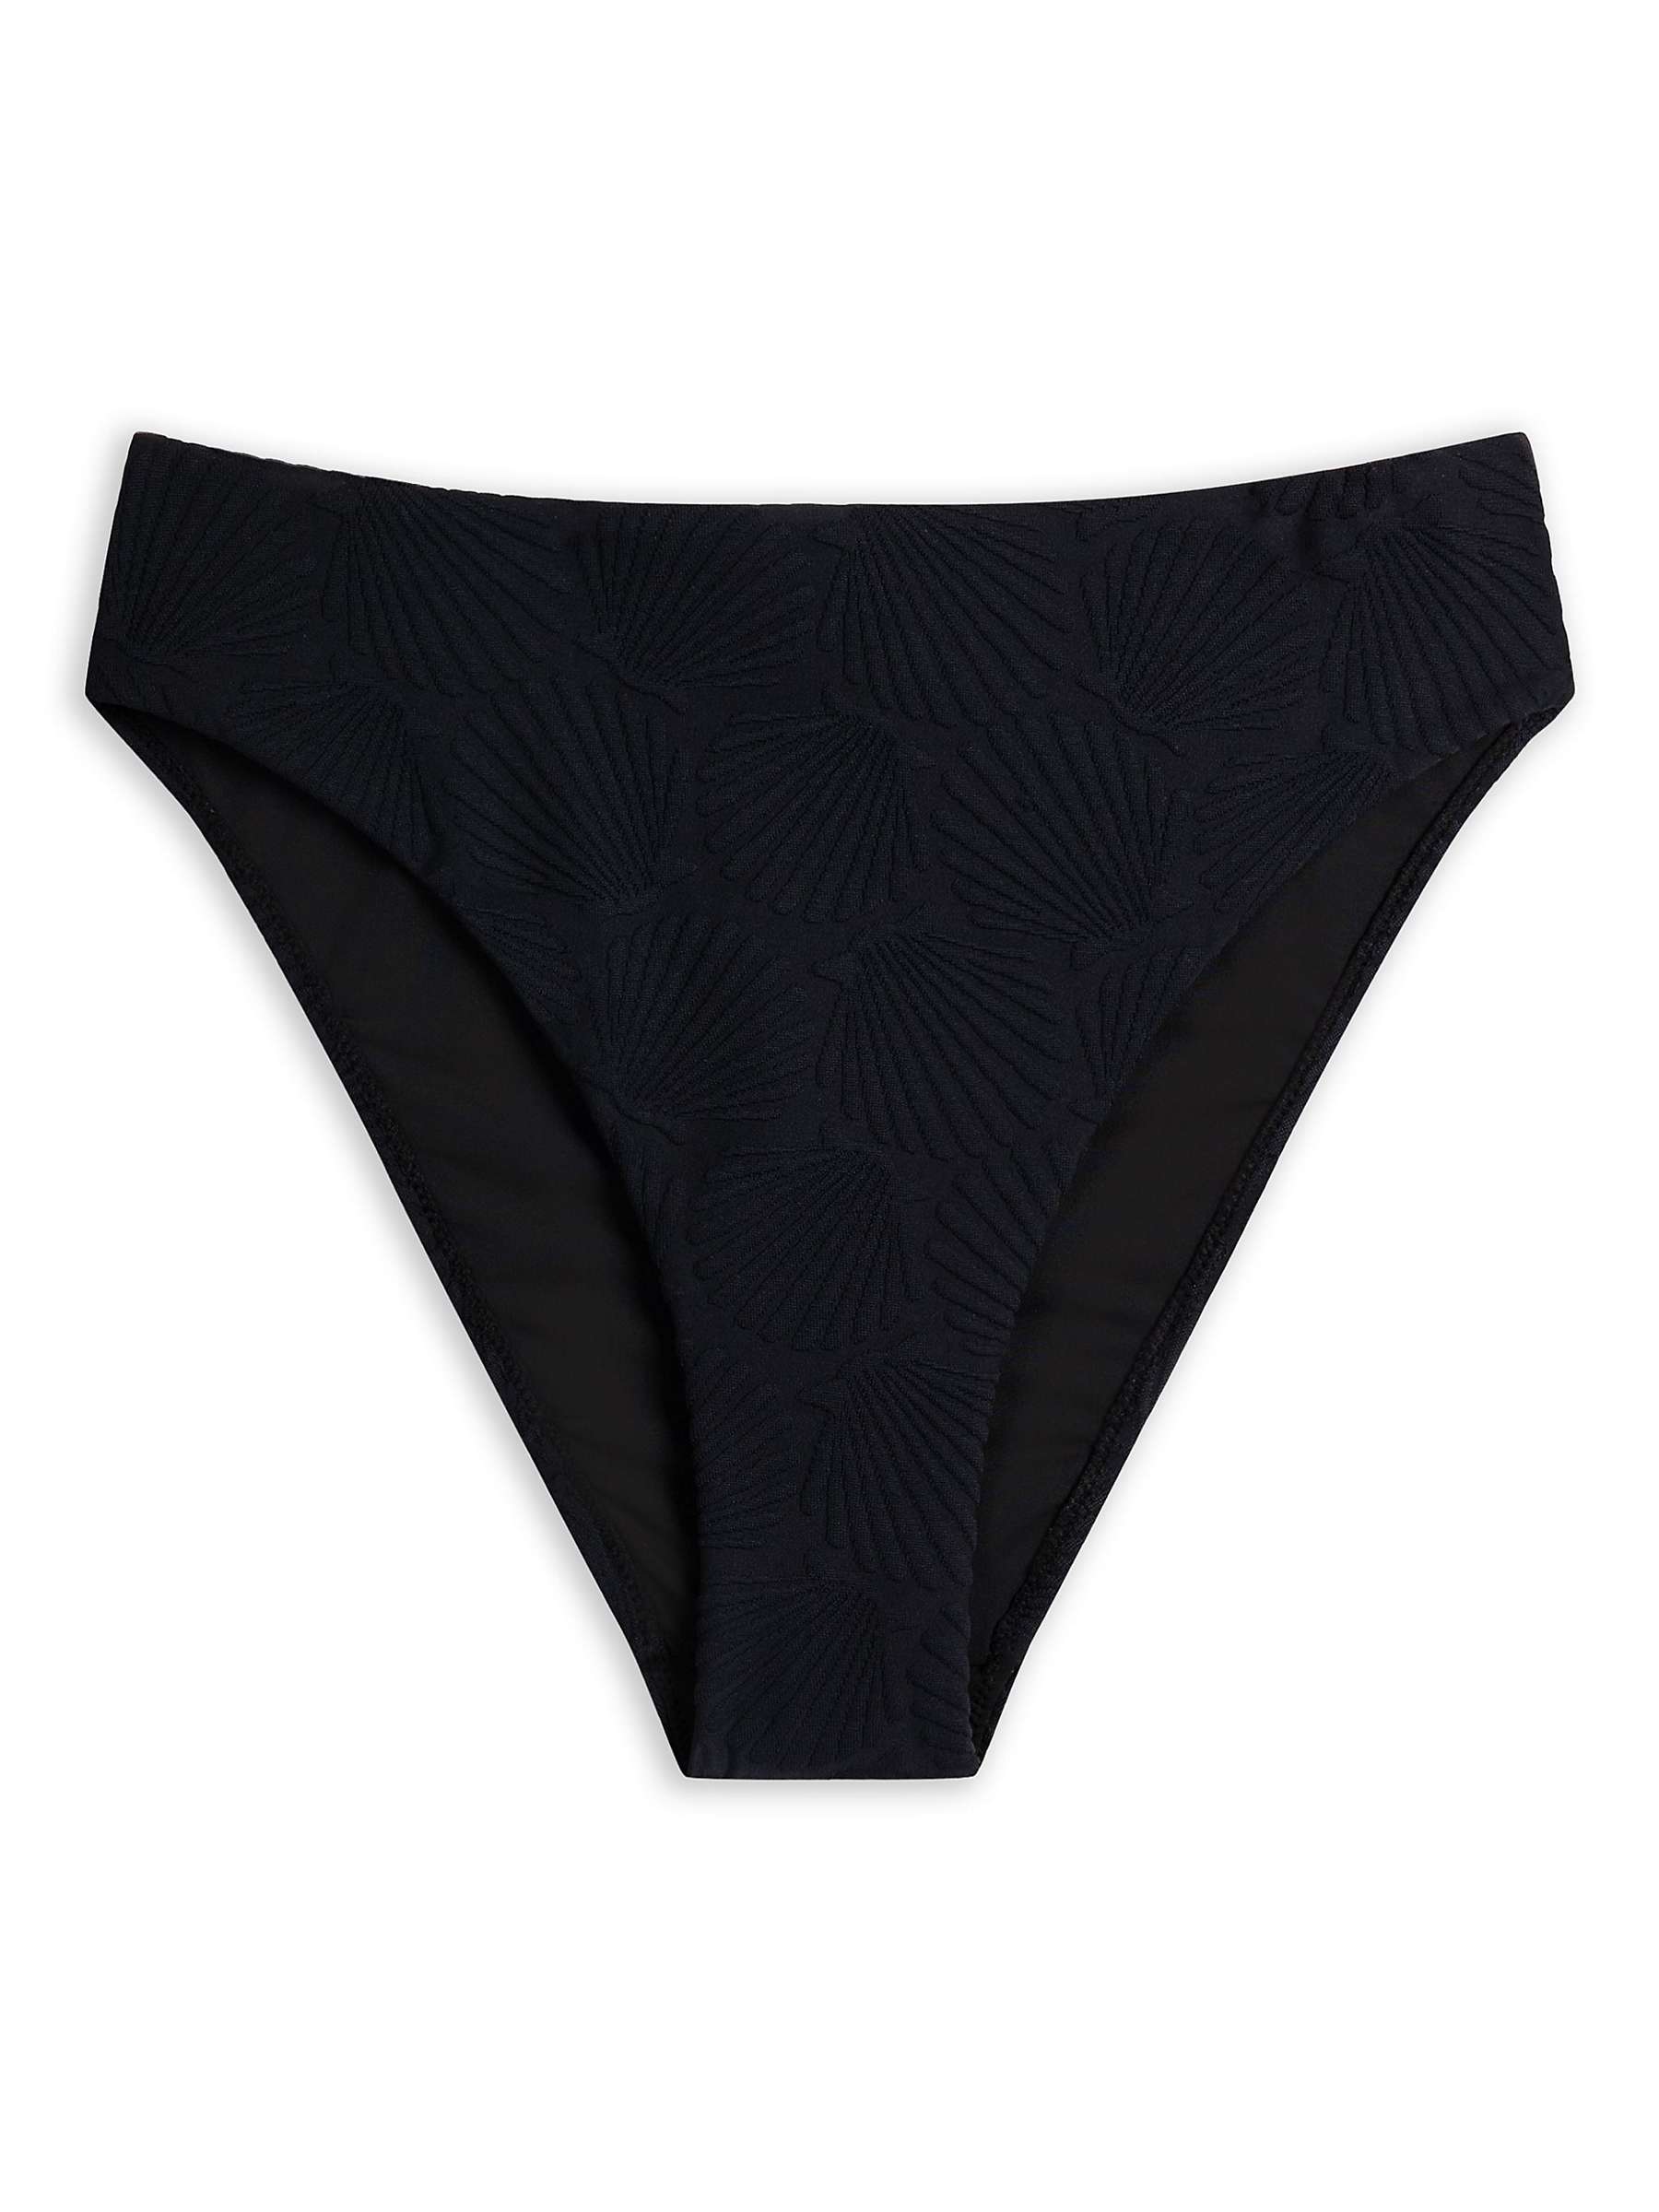 Buy Chelsea Peers Jacquard Shell High Waist Bikini Bottoms, Black Online at johnlewis.com